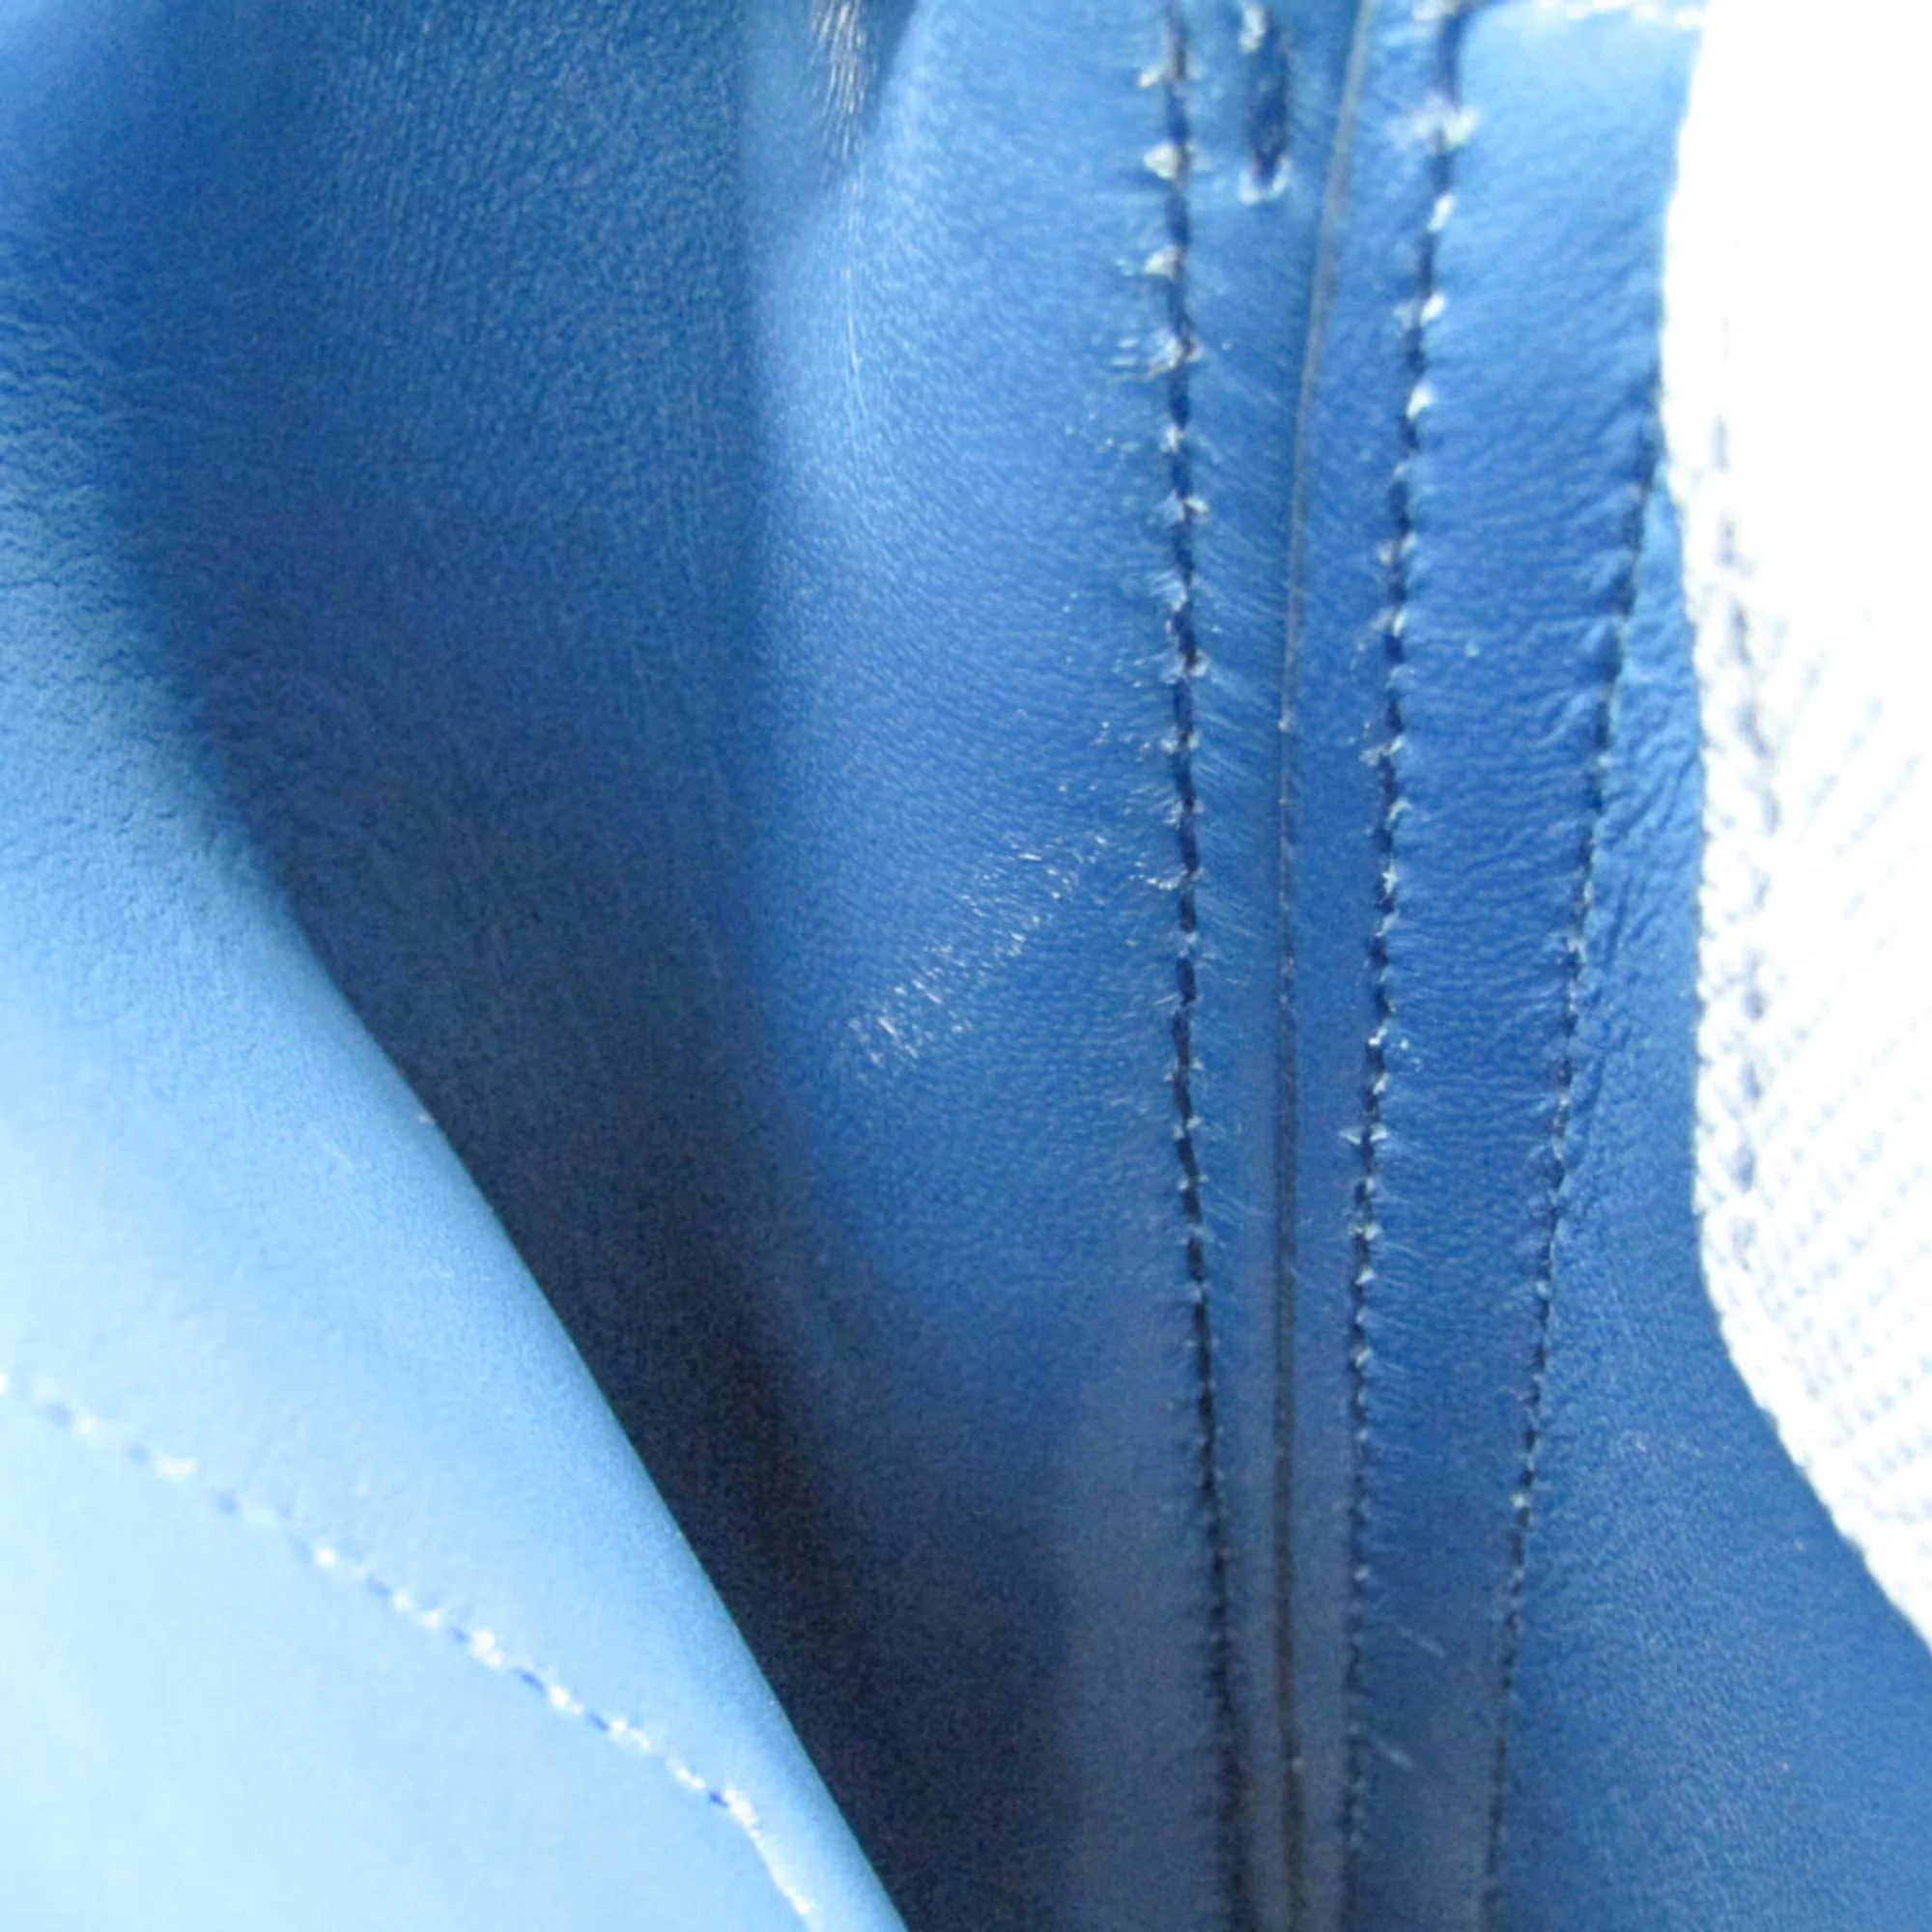 Prada Blue Saffiano Leather Small Cuir Tote Bag